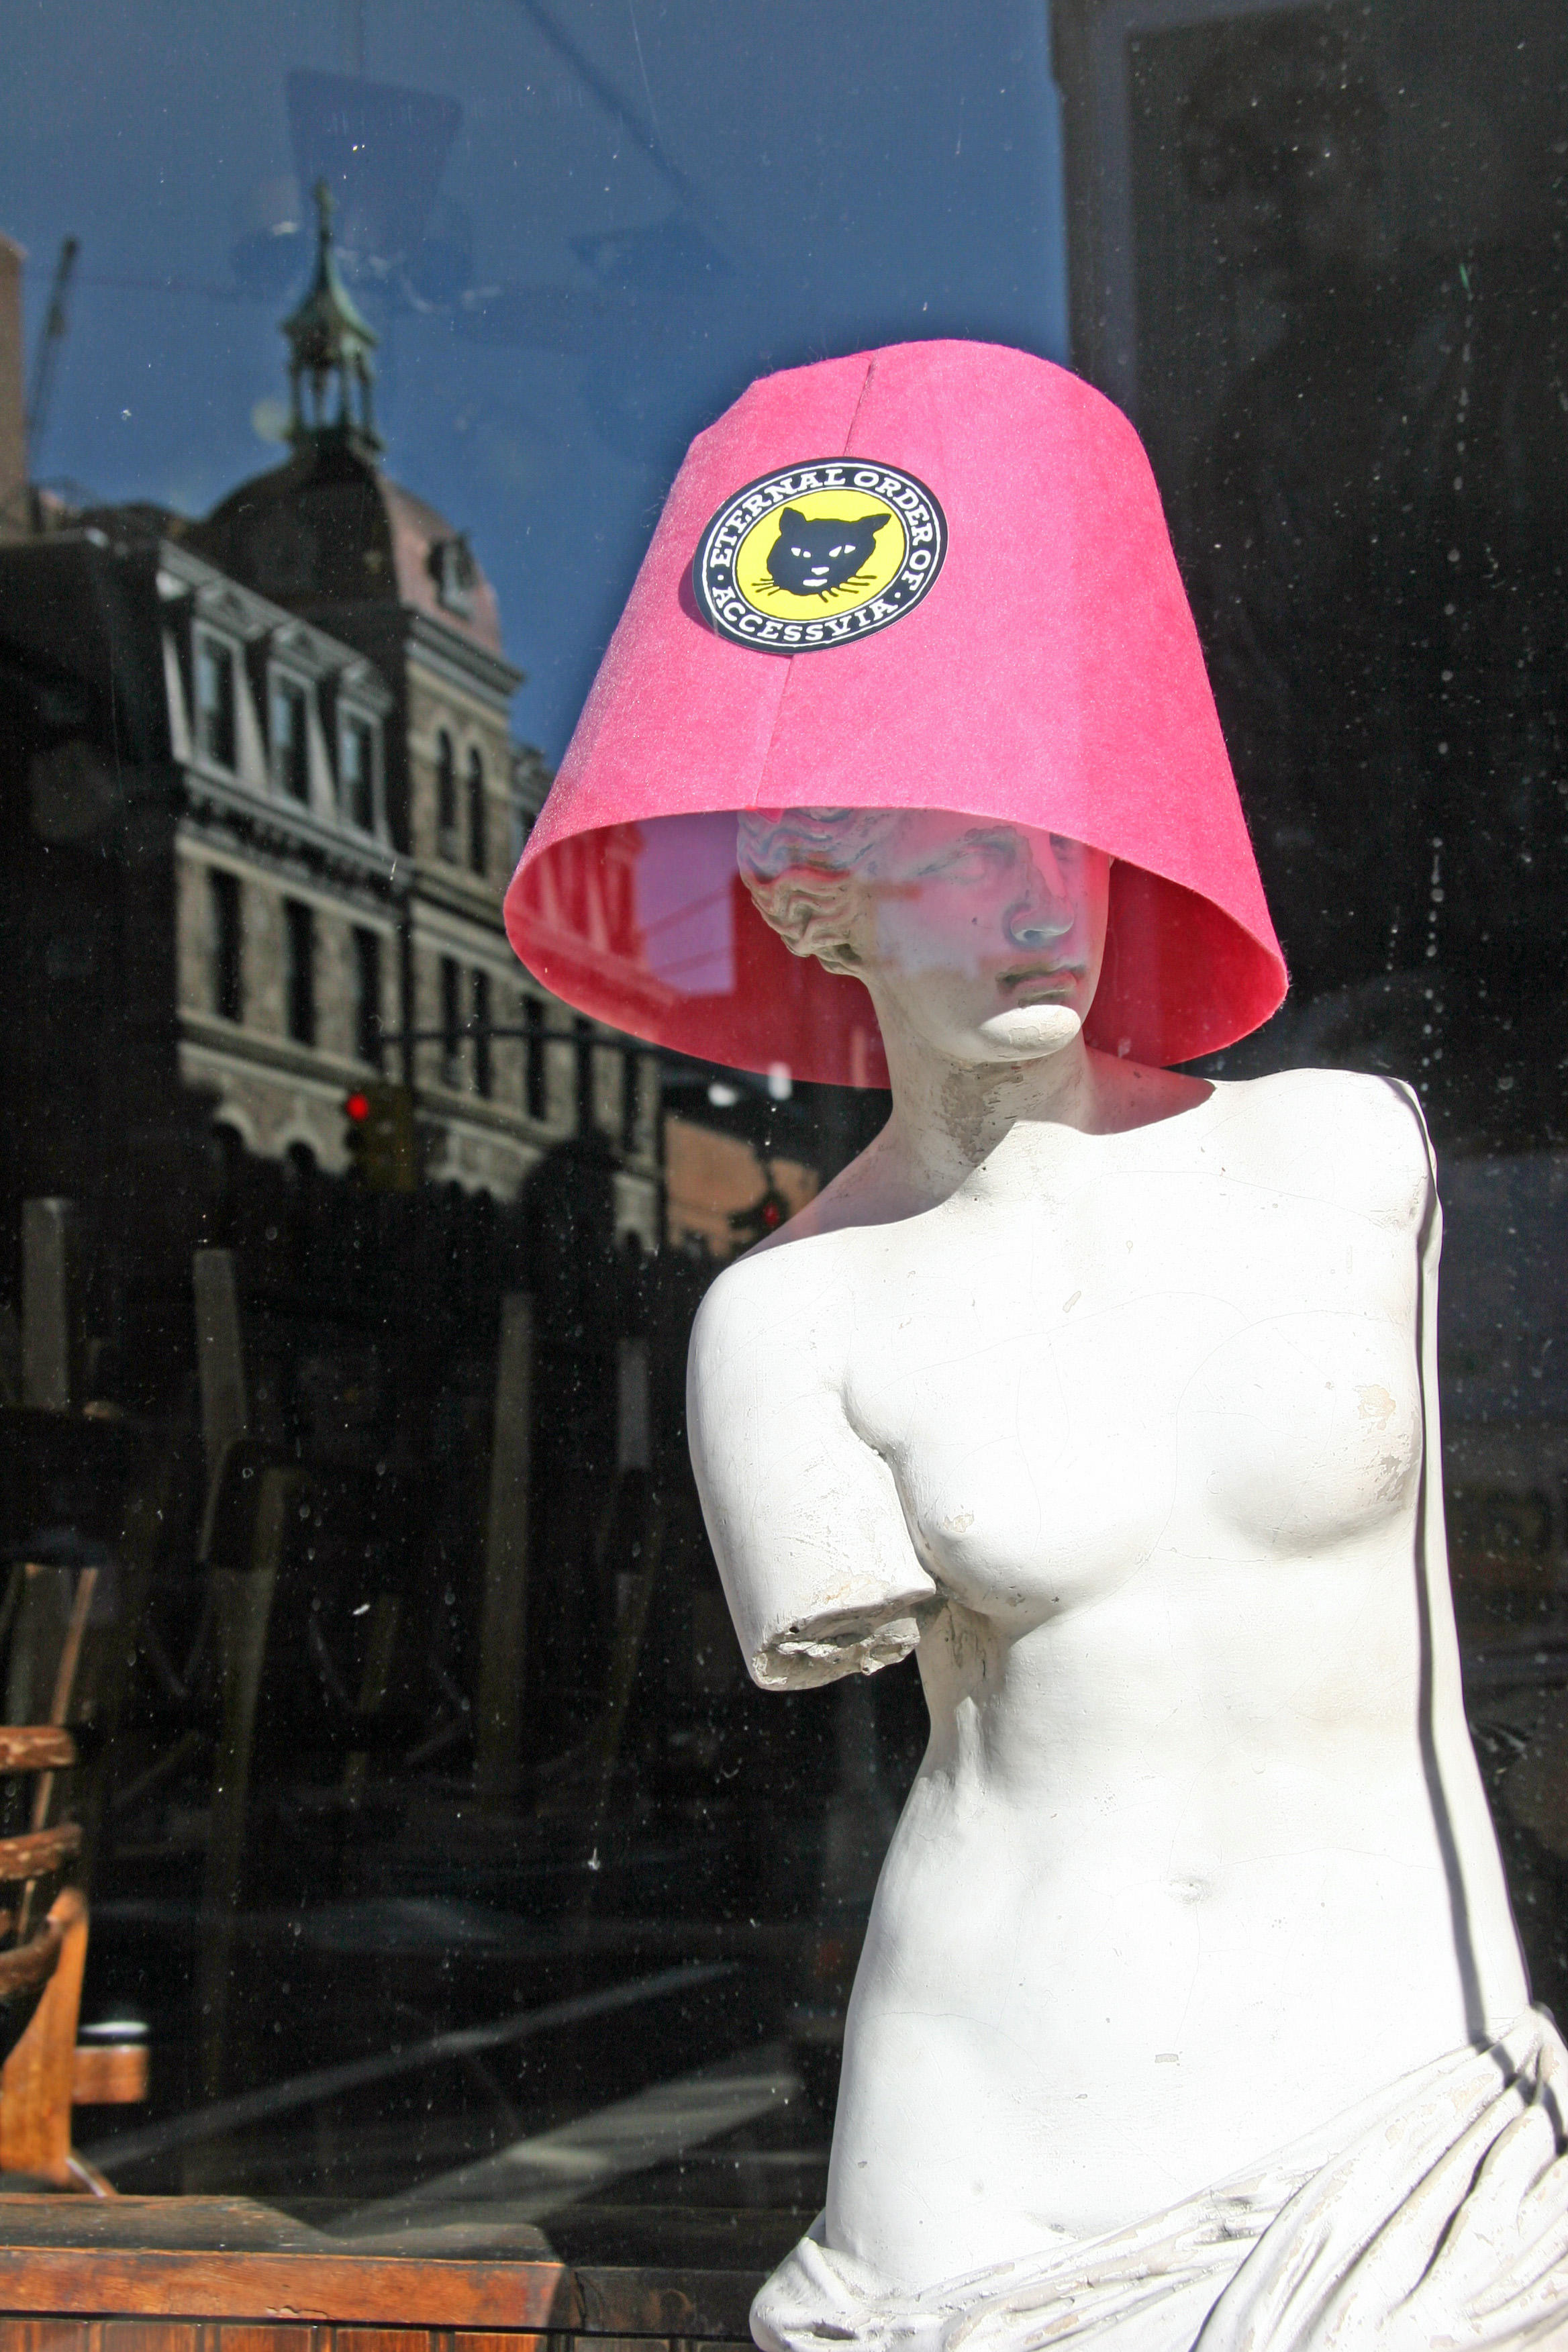 Venus de Milo Trying Out a New Easter Bonnet - Arturos Italian Restaurant Window